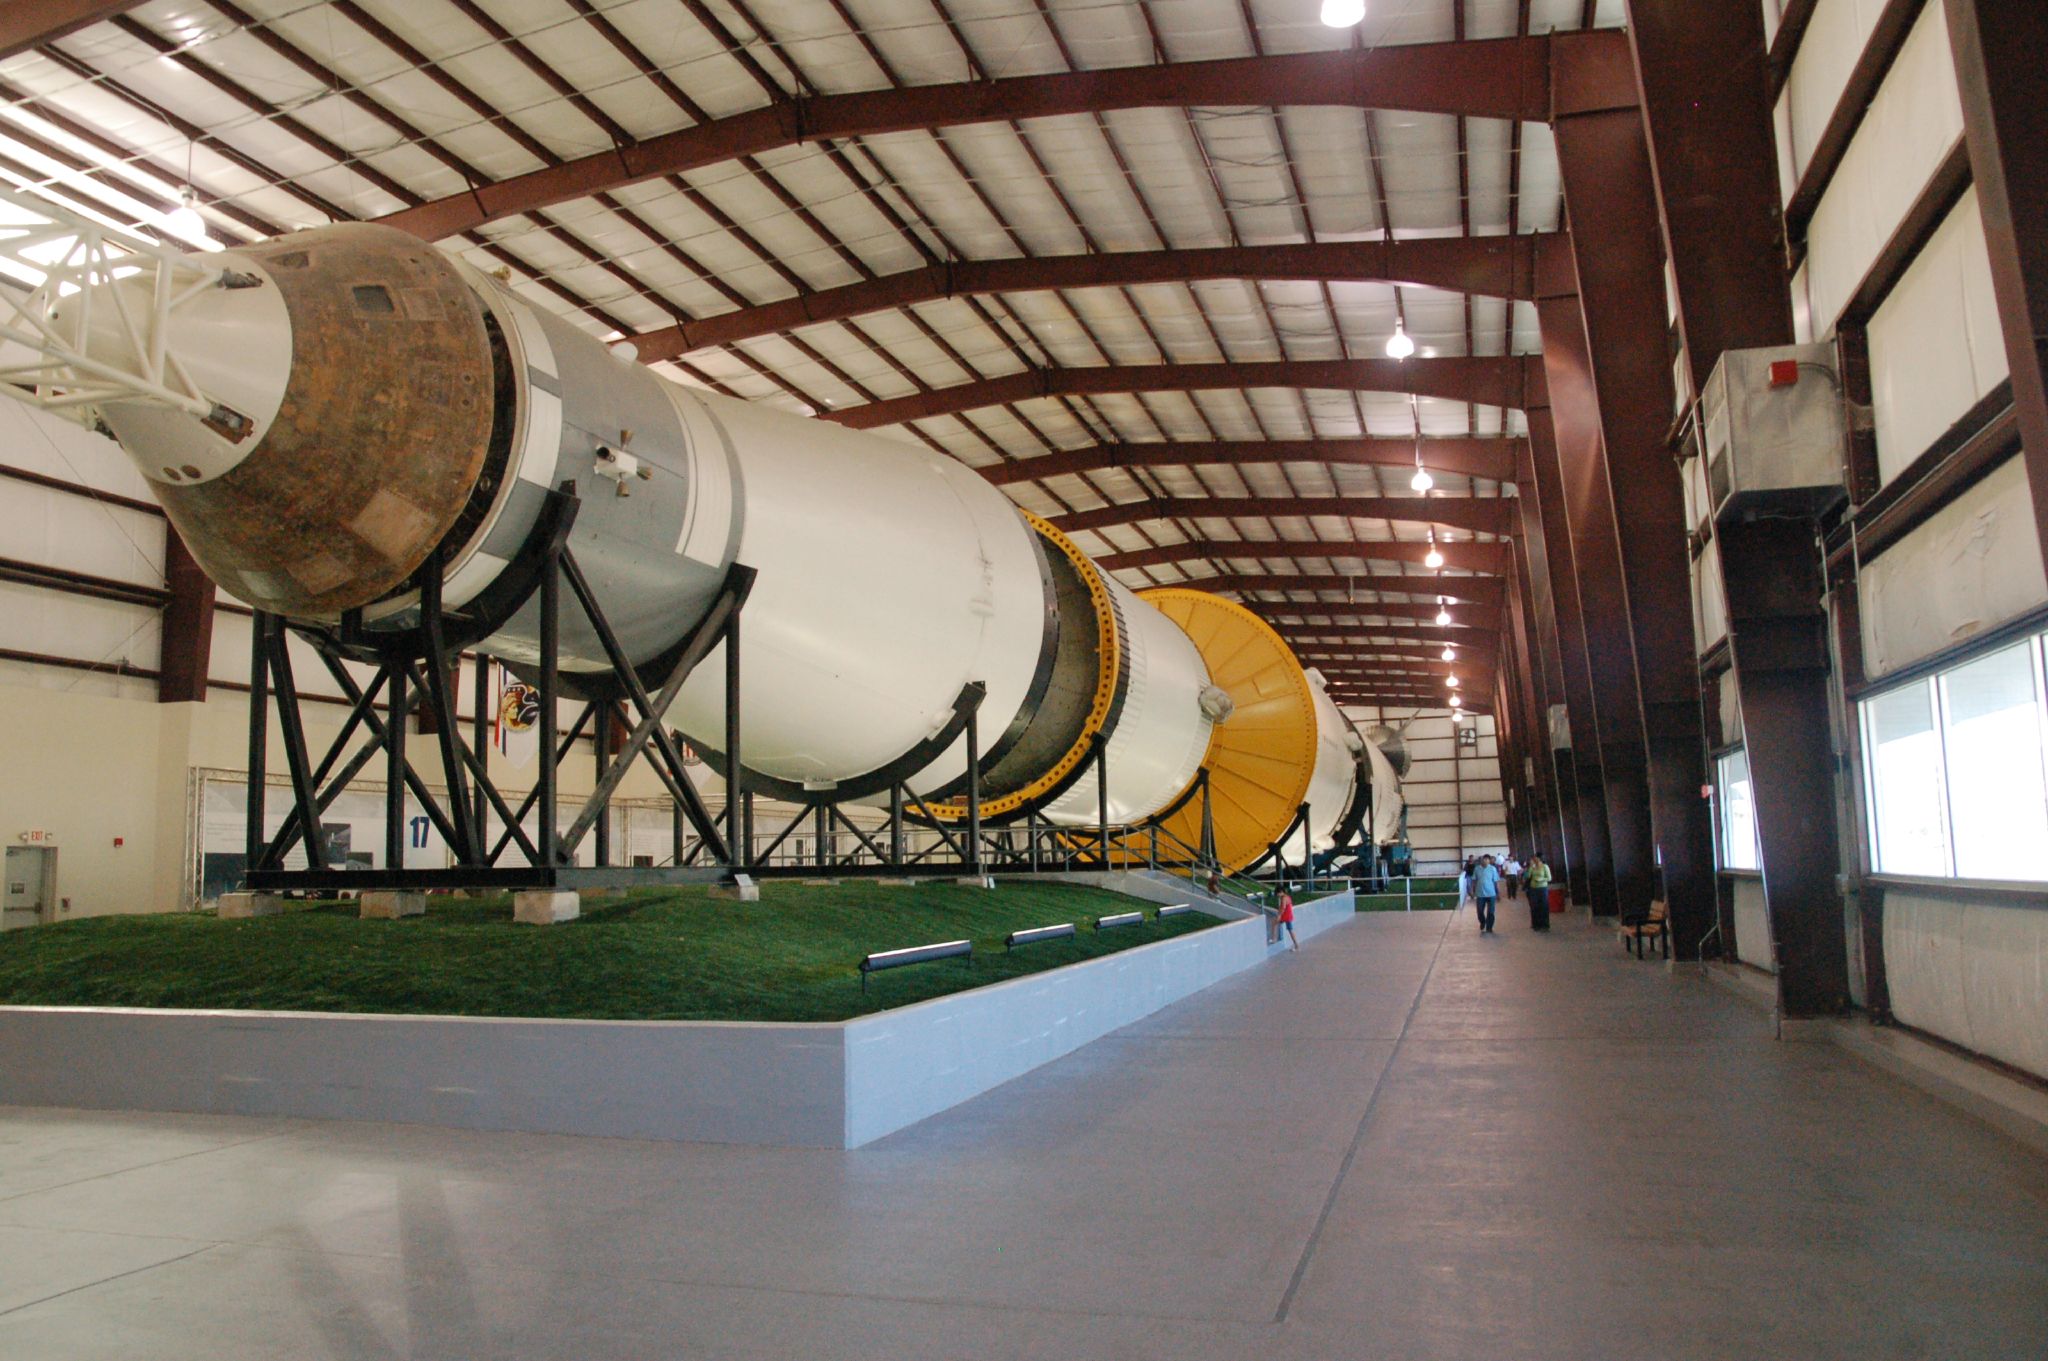 Saturn V Johnson Space Center display